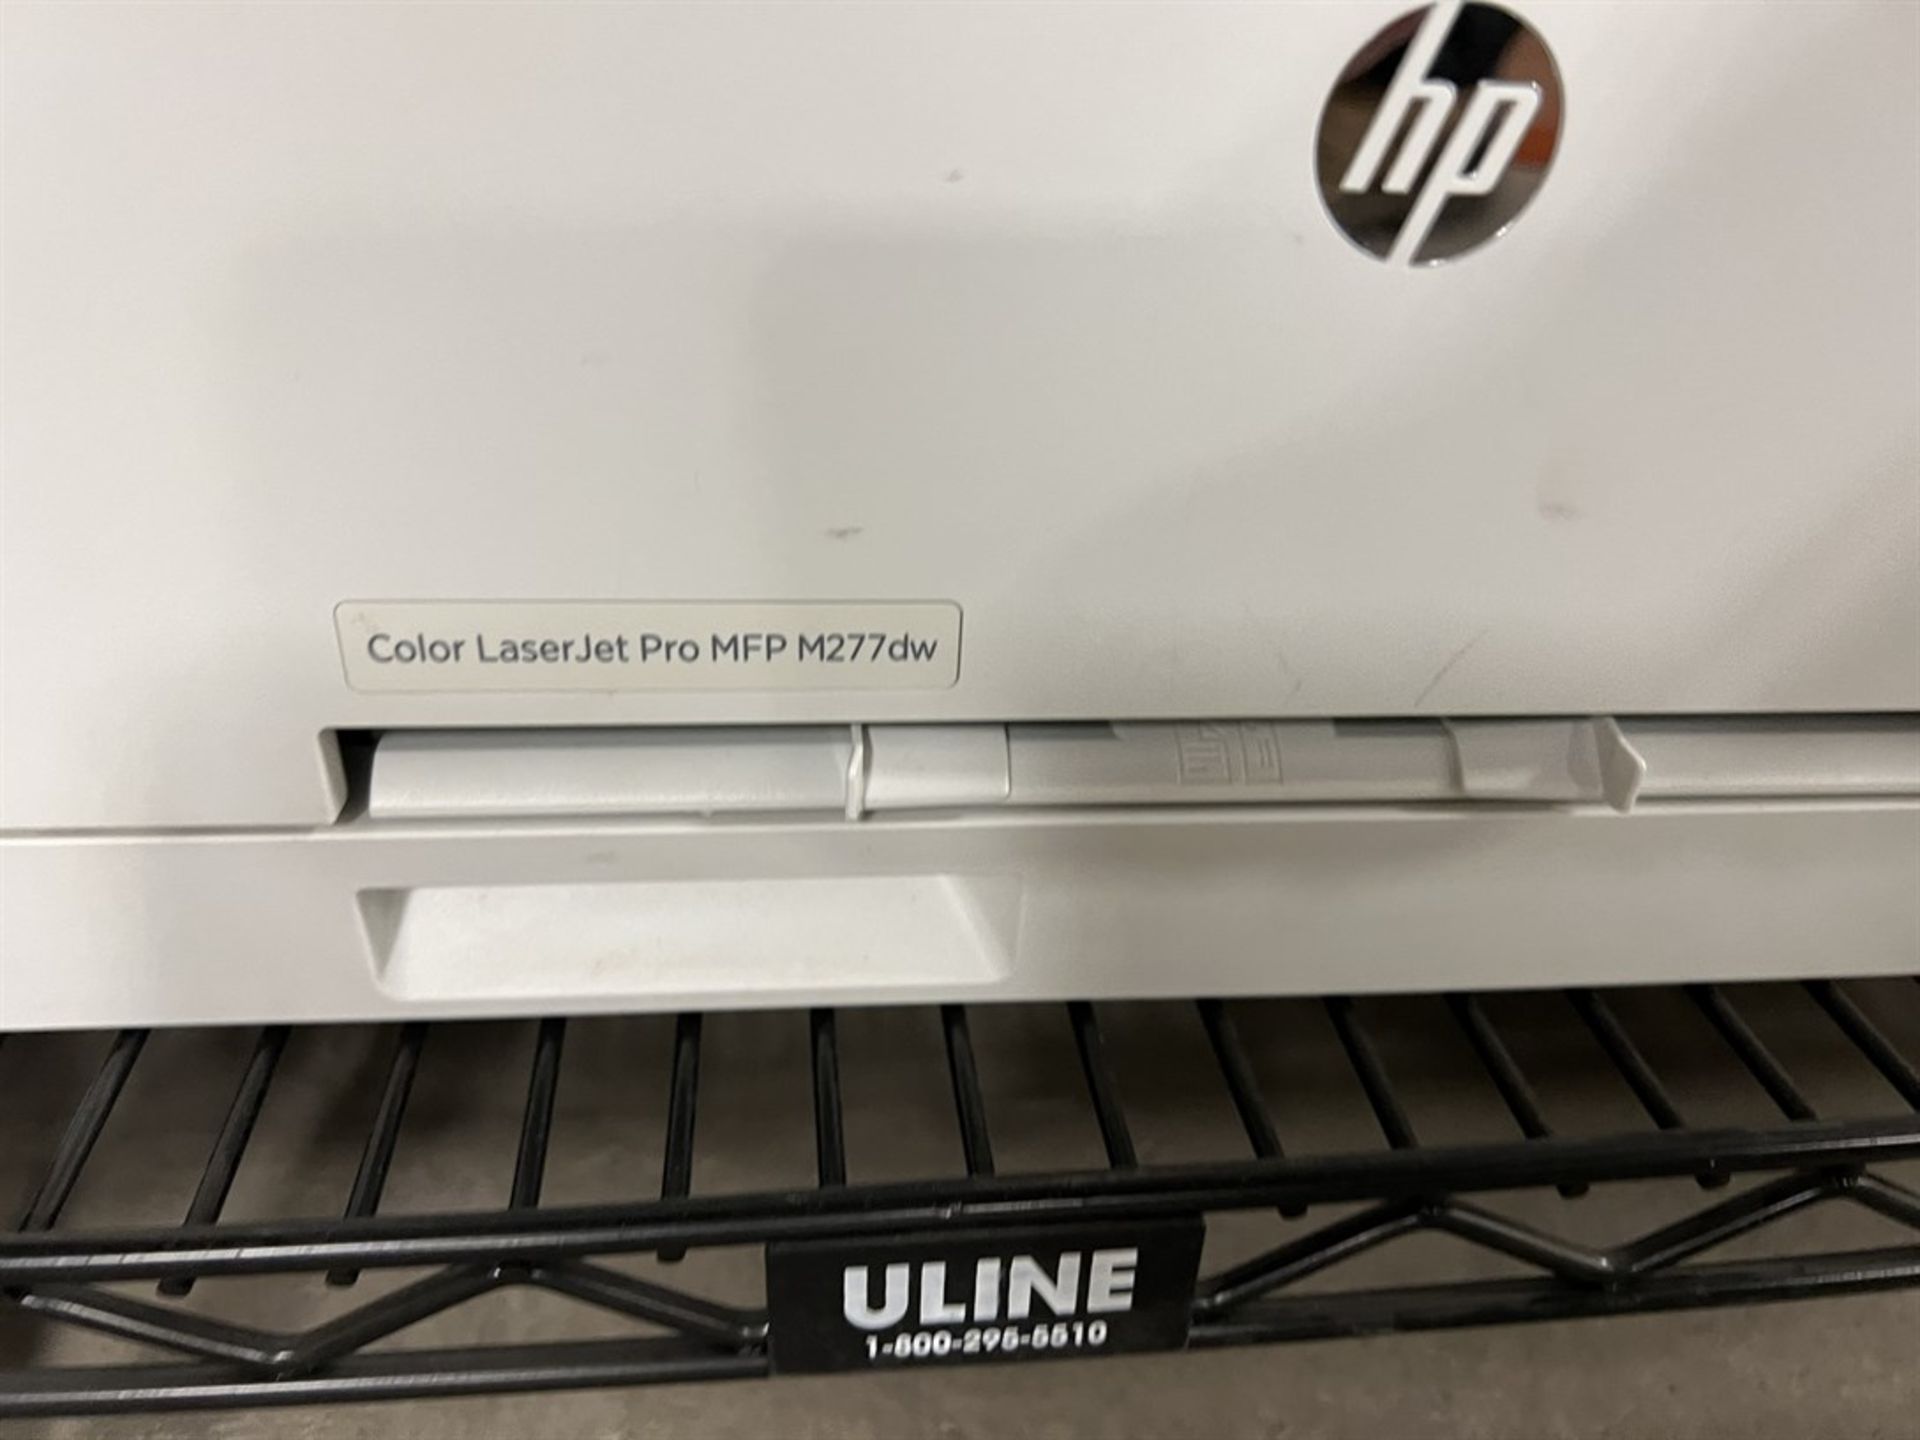 Lot of (2) HP Laser Jet Pro MFP M4277dw Printers - Image 2 of 3